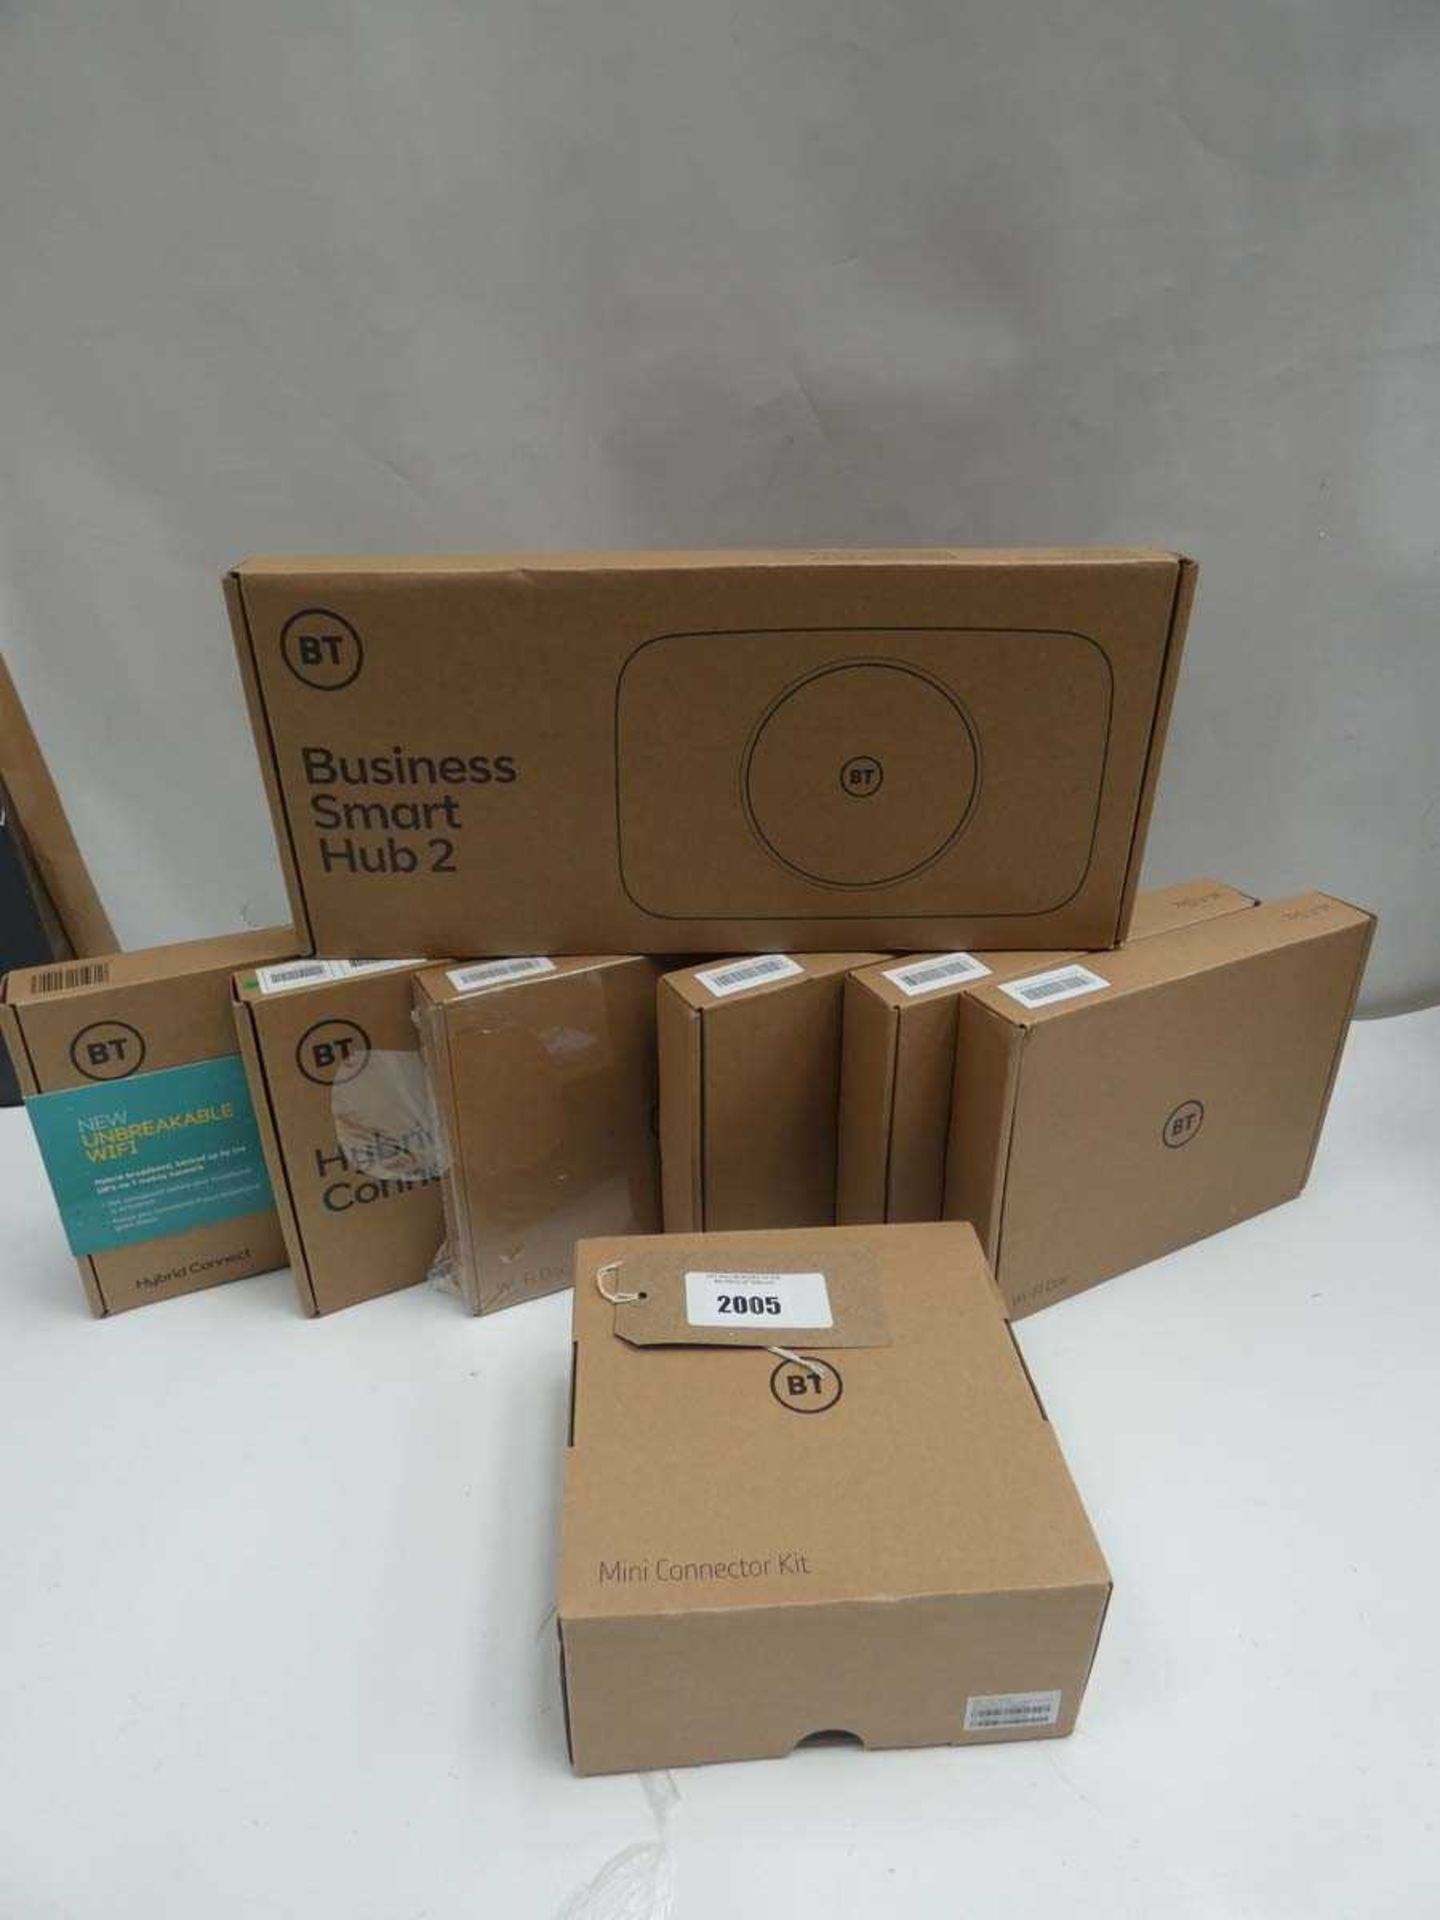 +VAT 4x BT WiFi Disc's, 2x BT Hybrid Connects, BT Business Smart Hub 2's and BT Mini Connector Kit